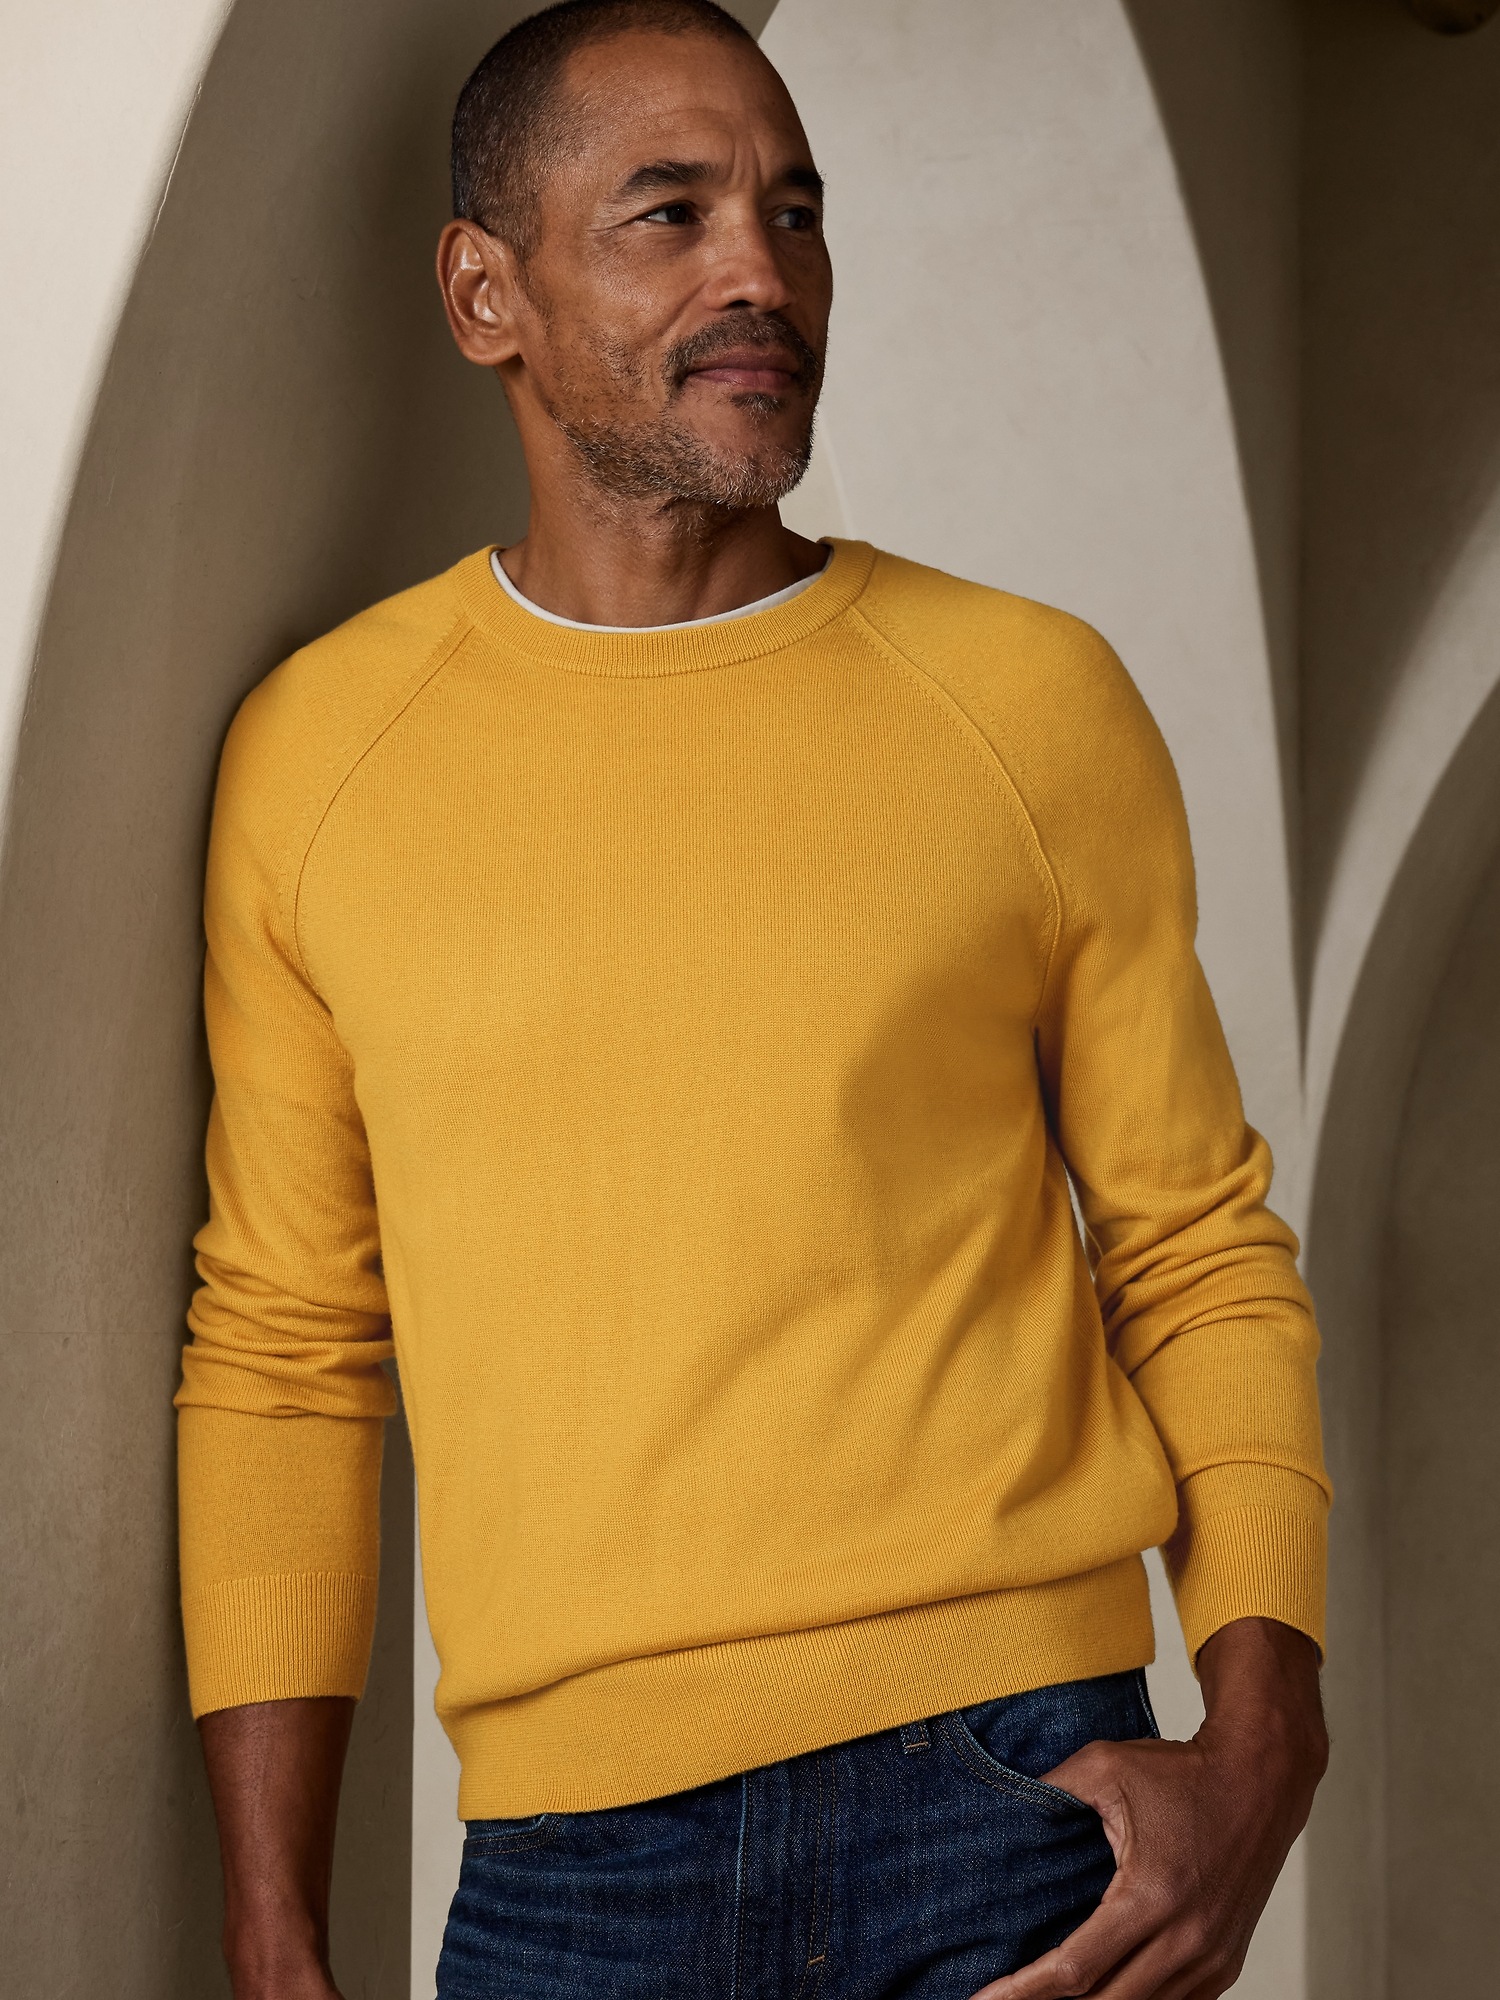 Raffaello Merino Wool Lightweight V-Neck Pullover Sweater - Emporio Clothing